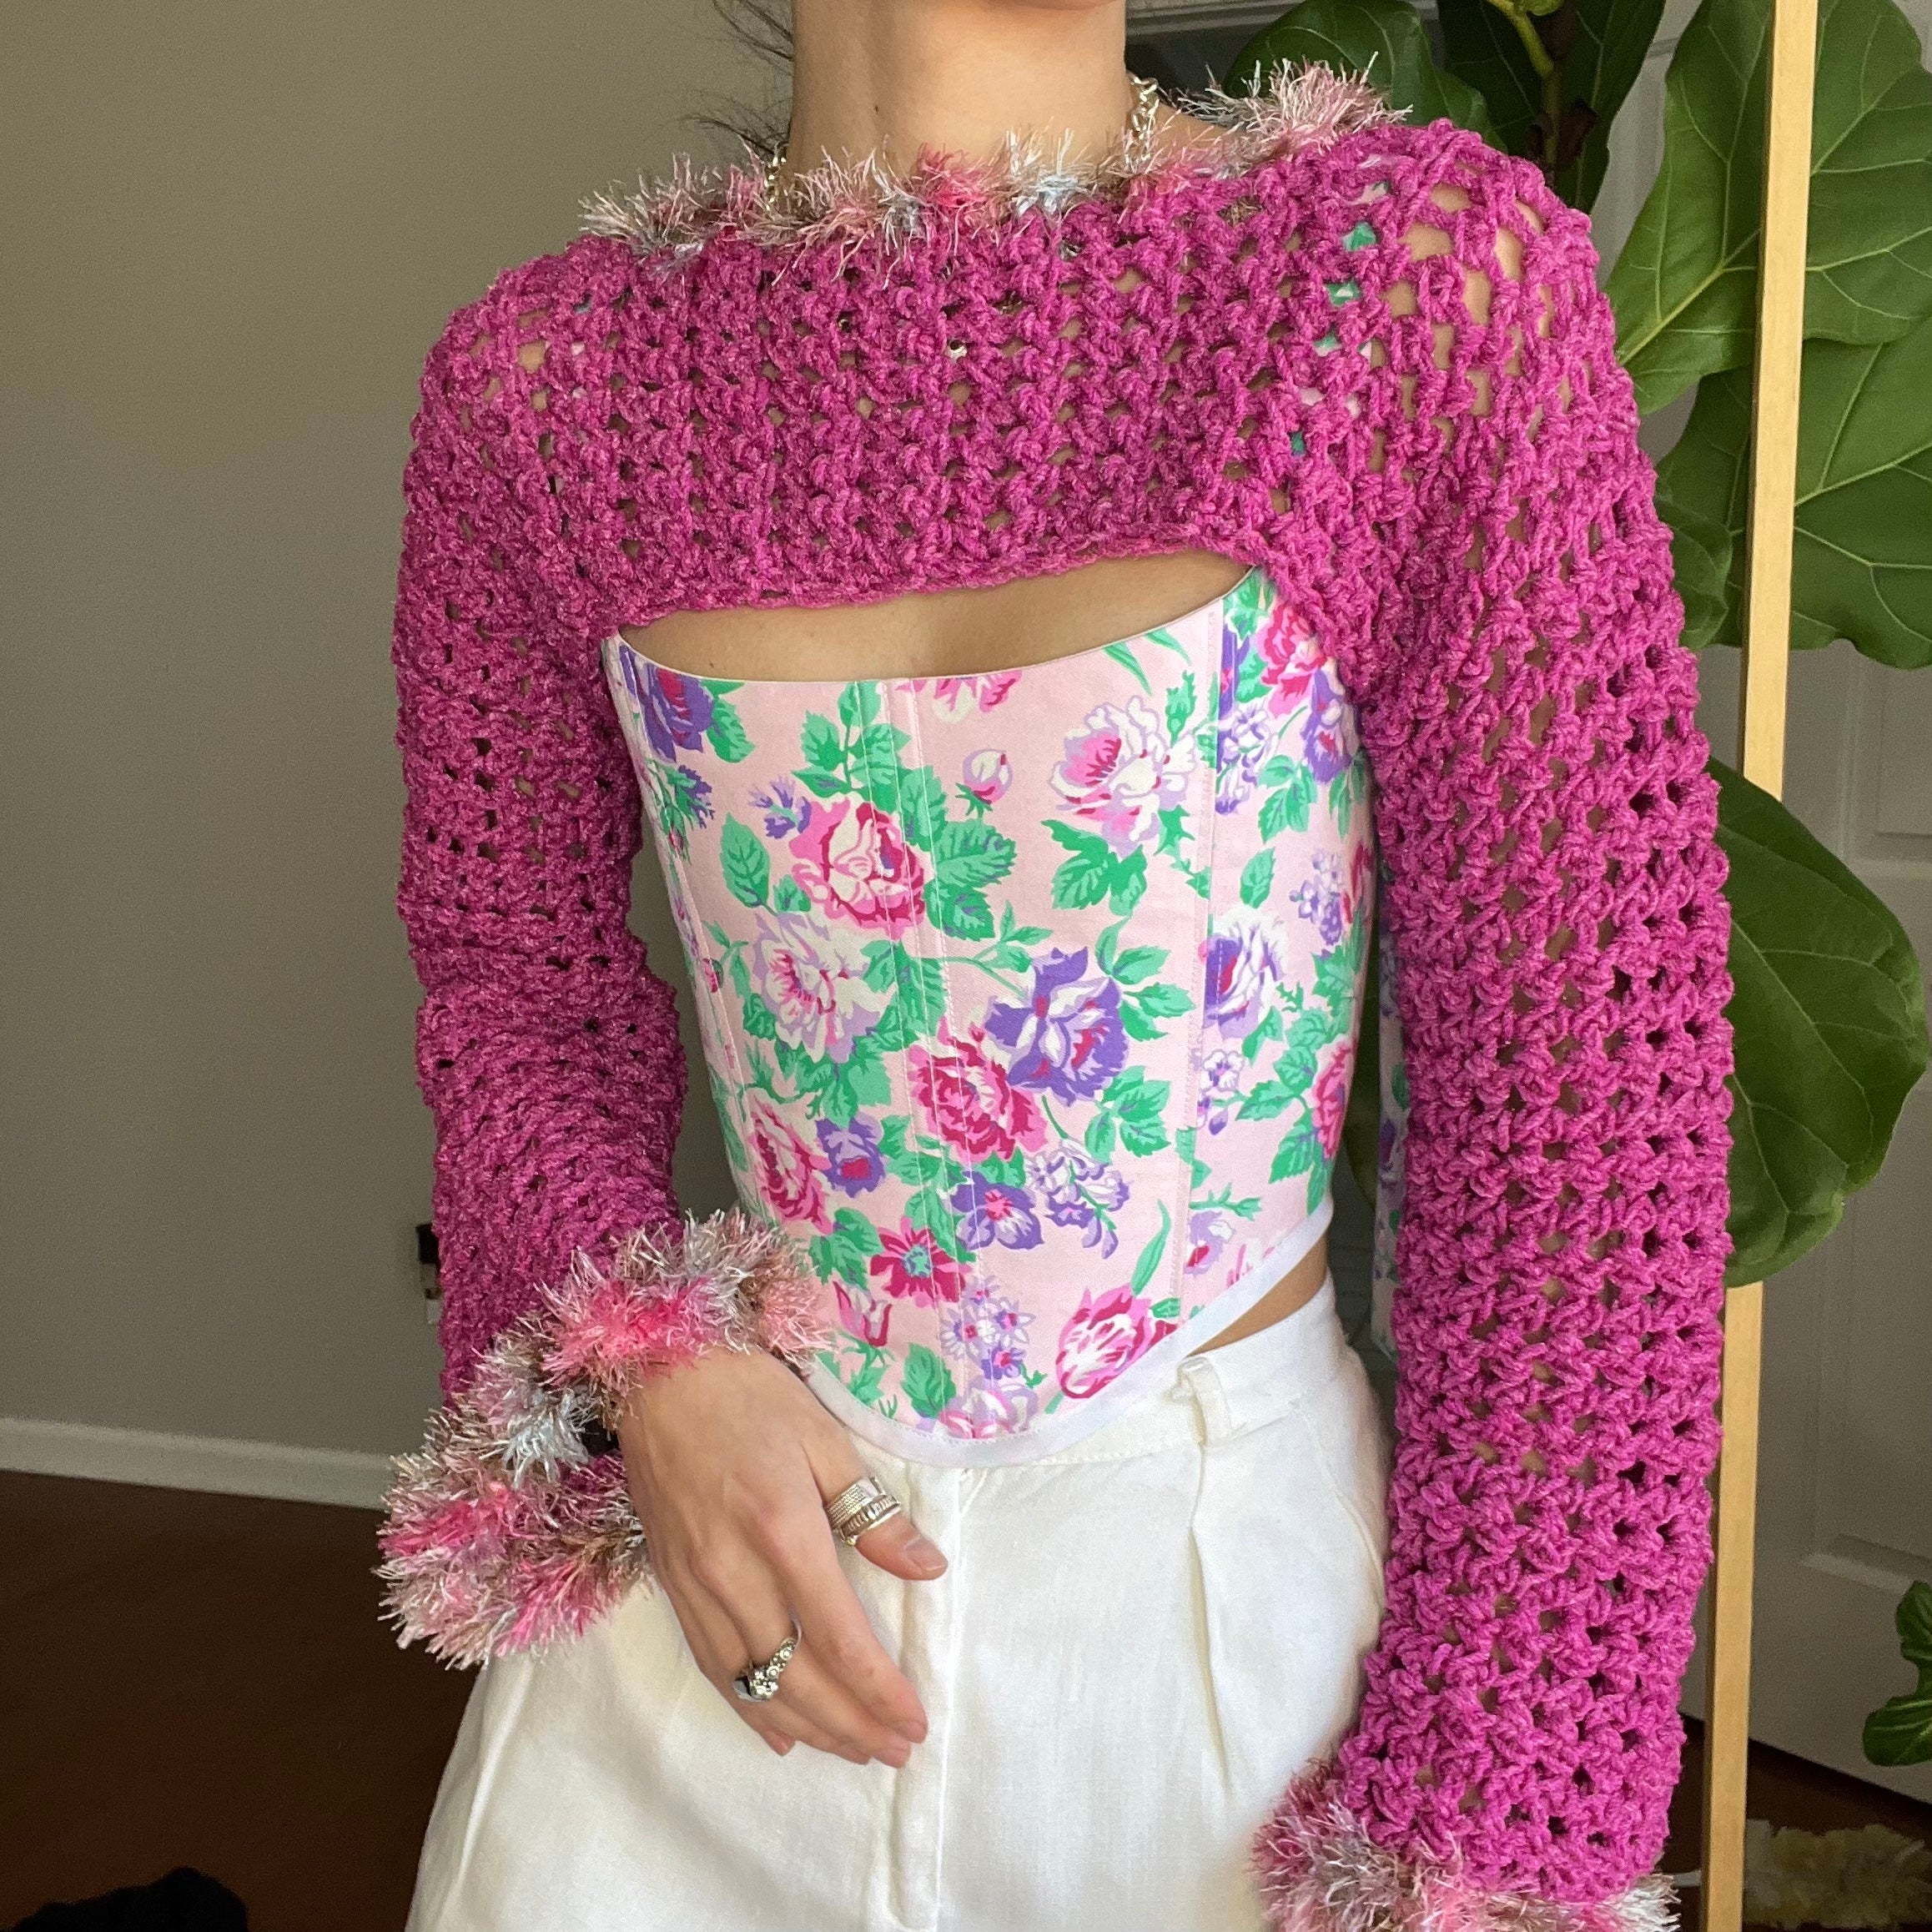 Hot pink Crocheted Shrug Bolero